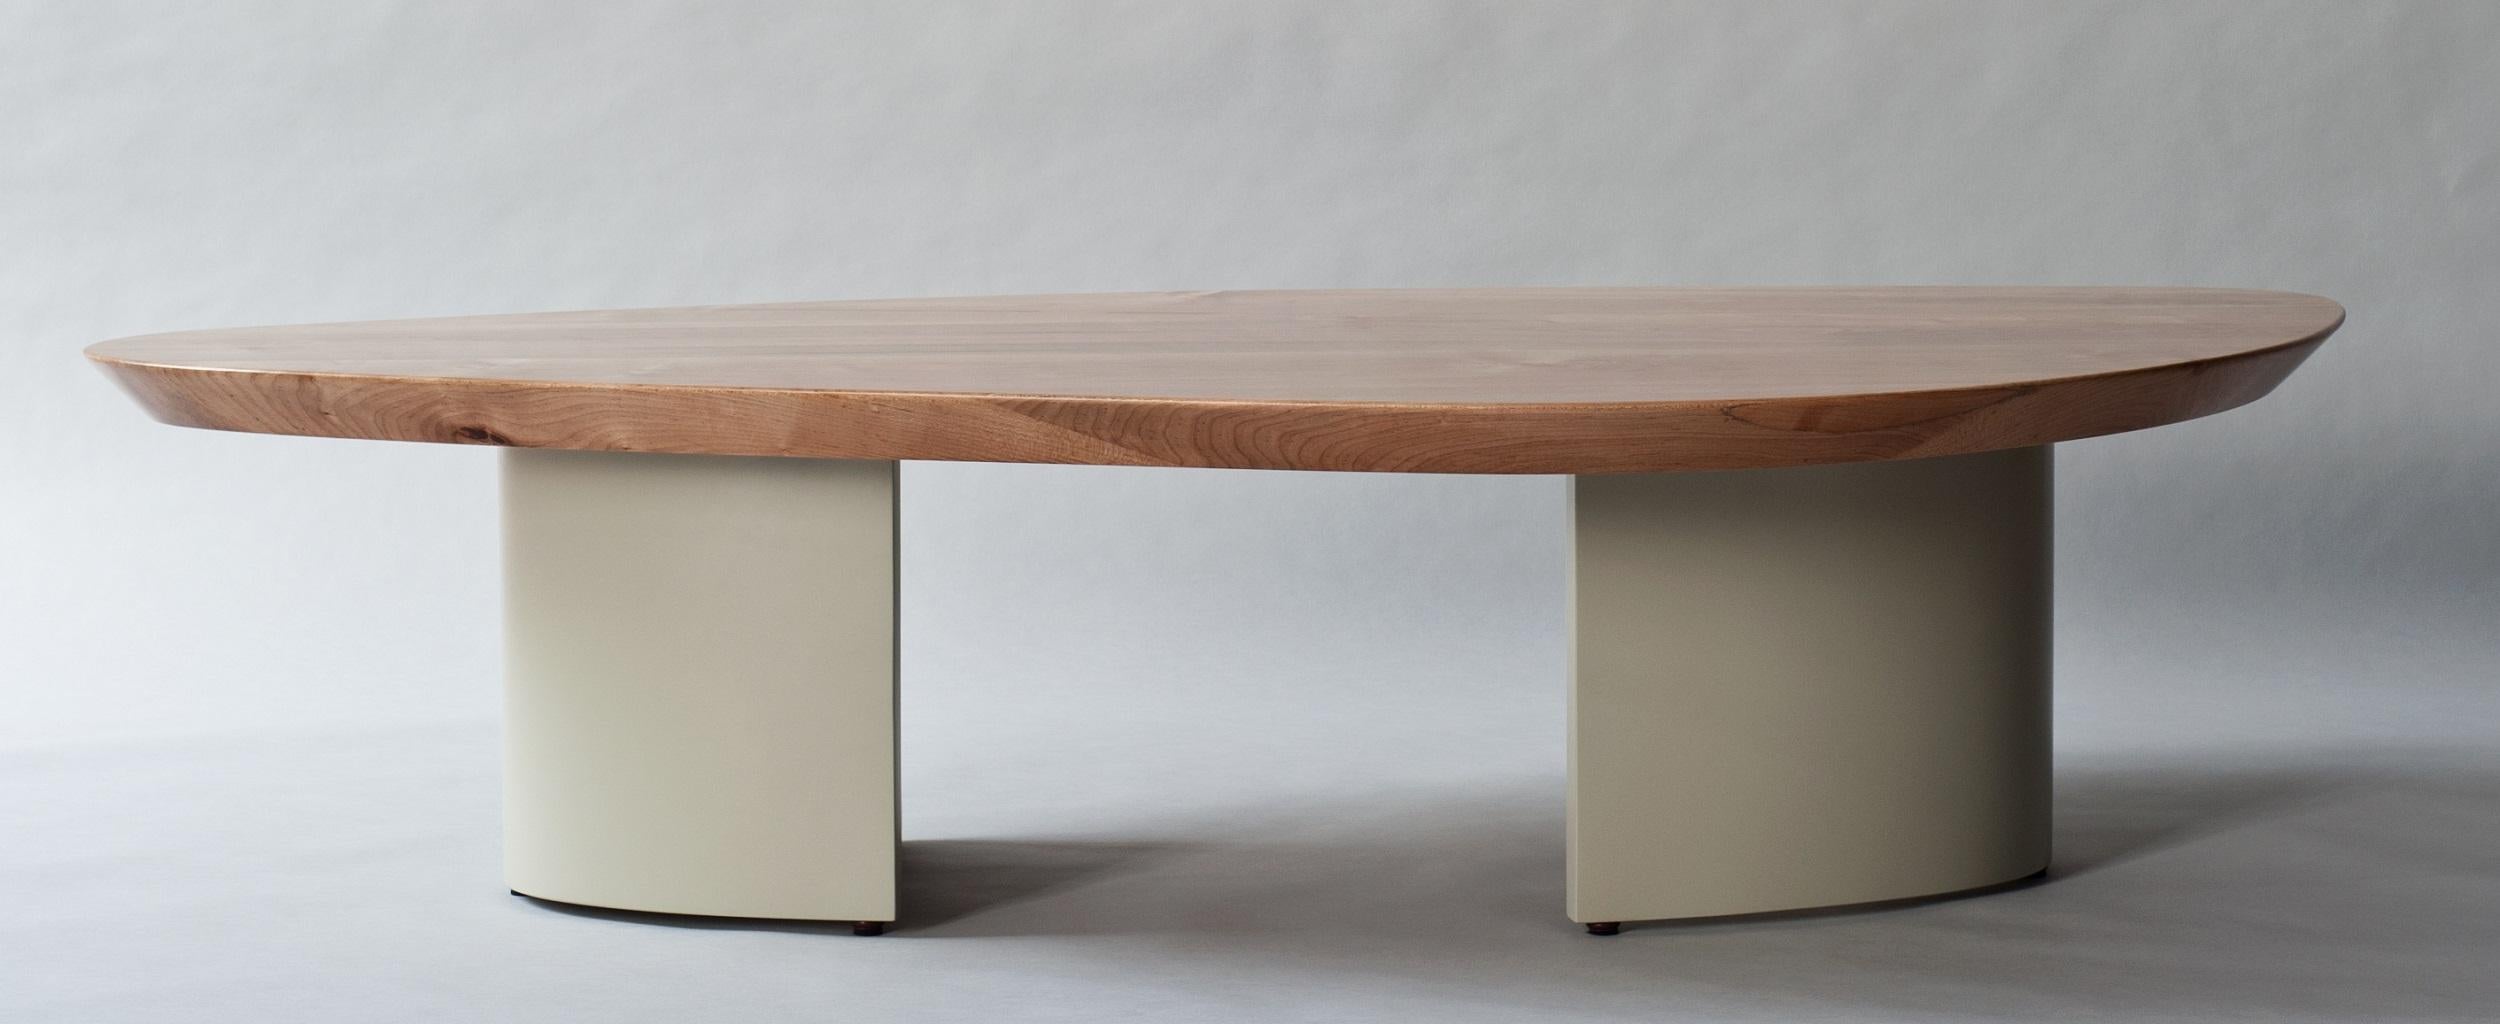 Contemporary Floor Model - Ledge Coffee Table by DeMuro Das in Solid Maple & Pebble Grey Base